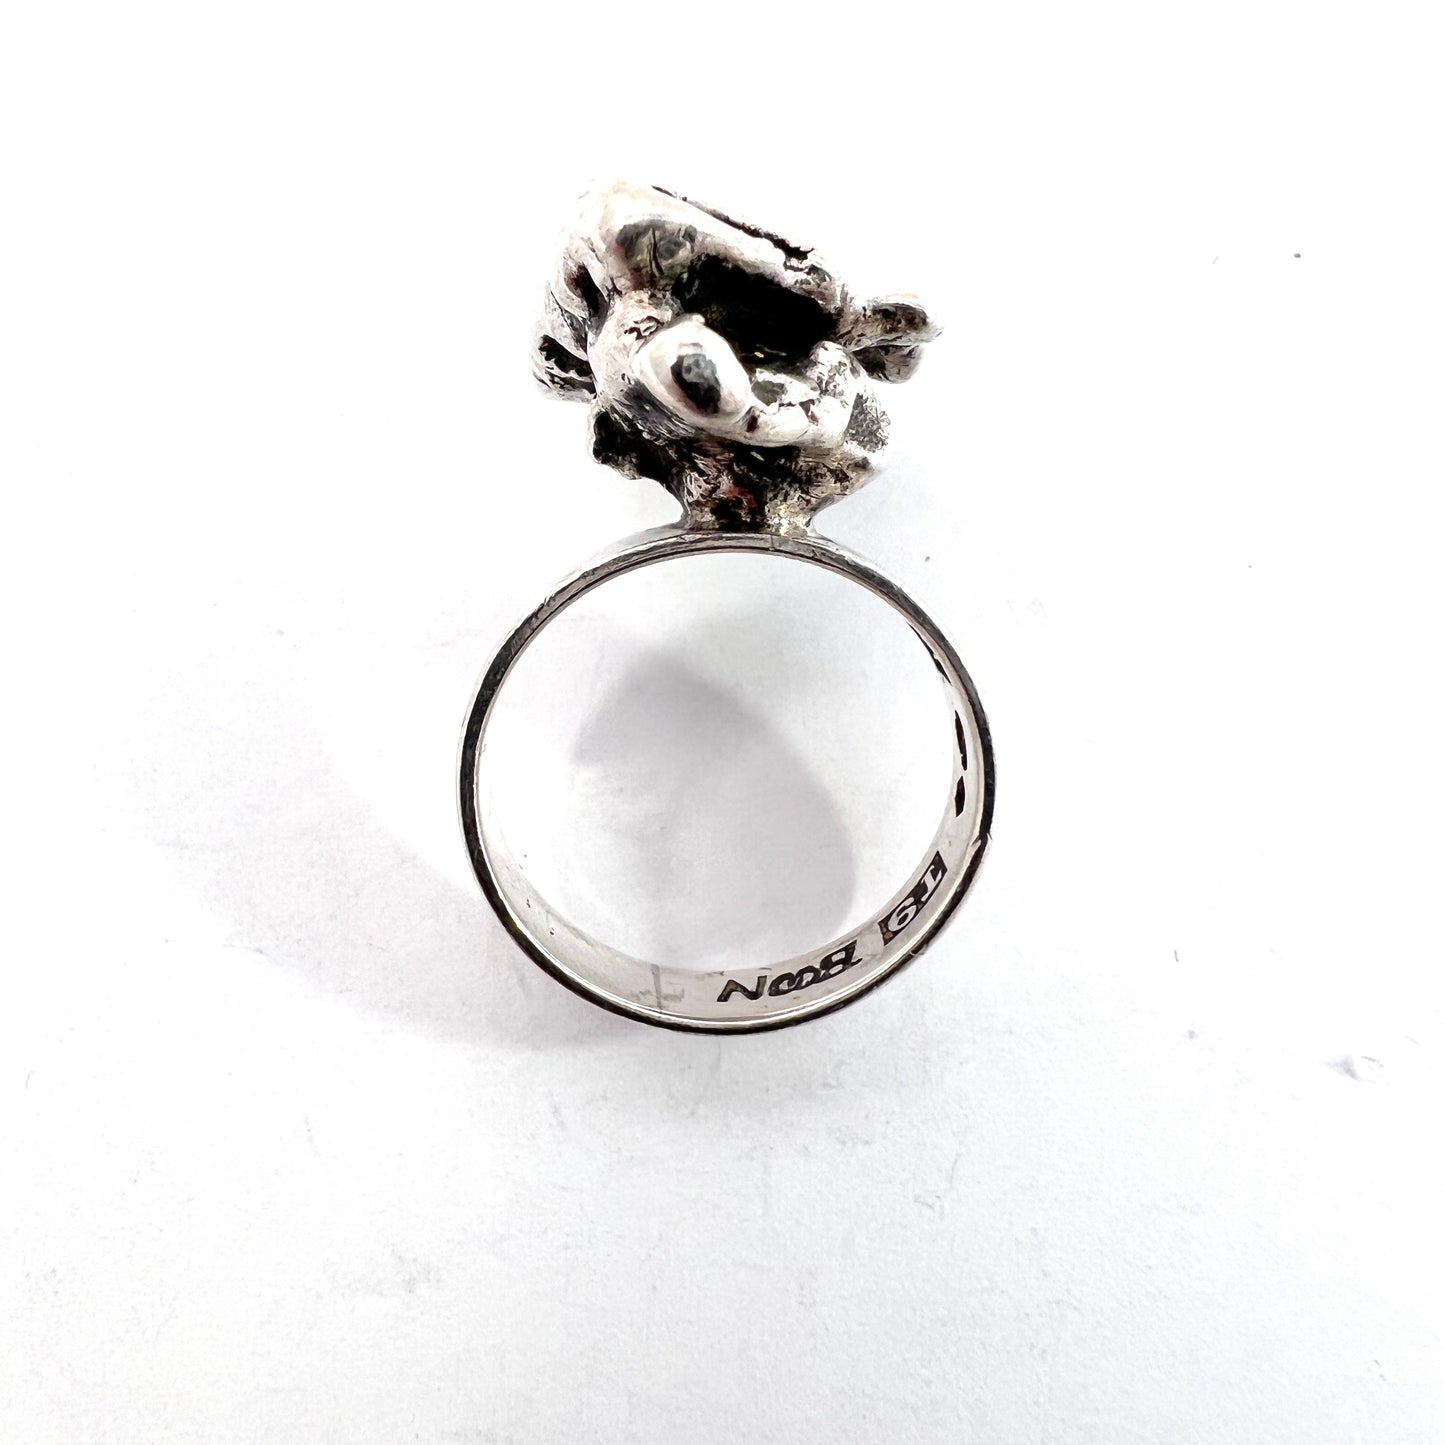 Atelje Te-Boon, Sweden 1969 Vintage Modernist Sterling Silver Agate Ring. Signed.